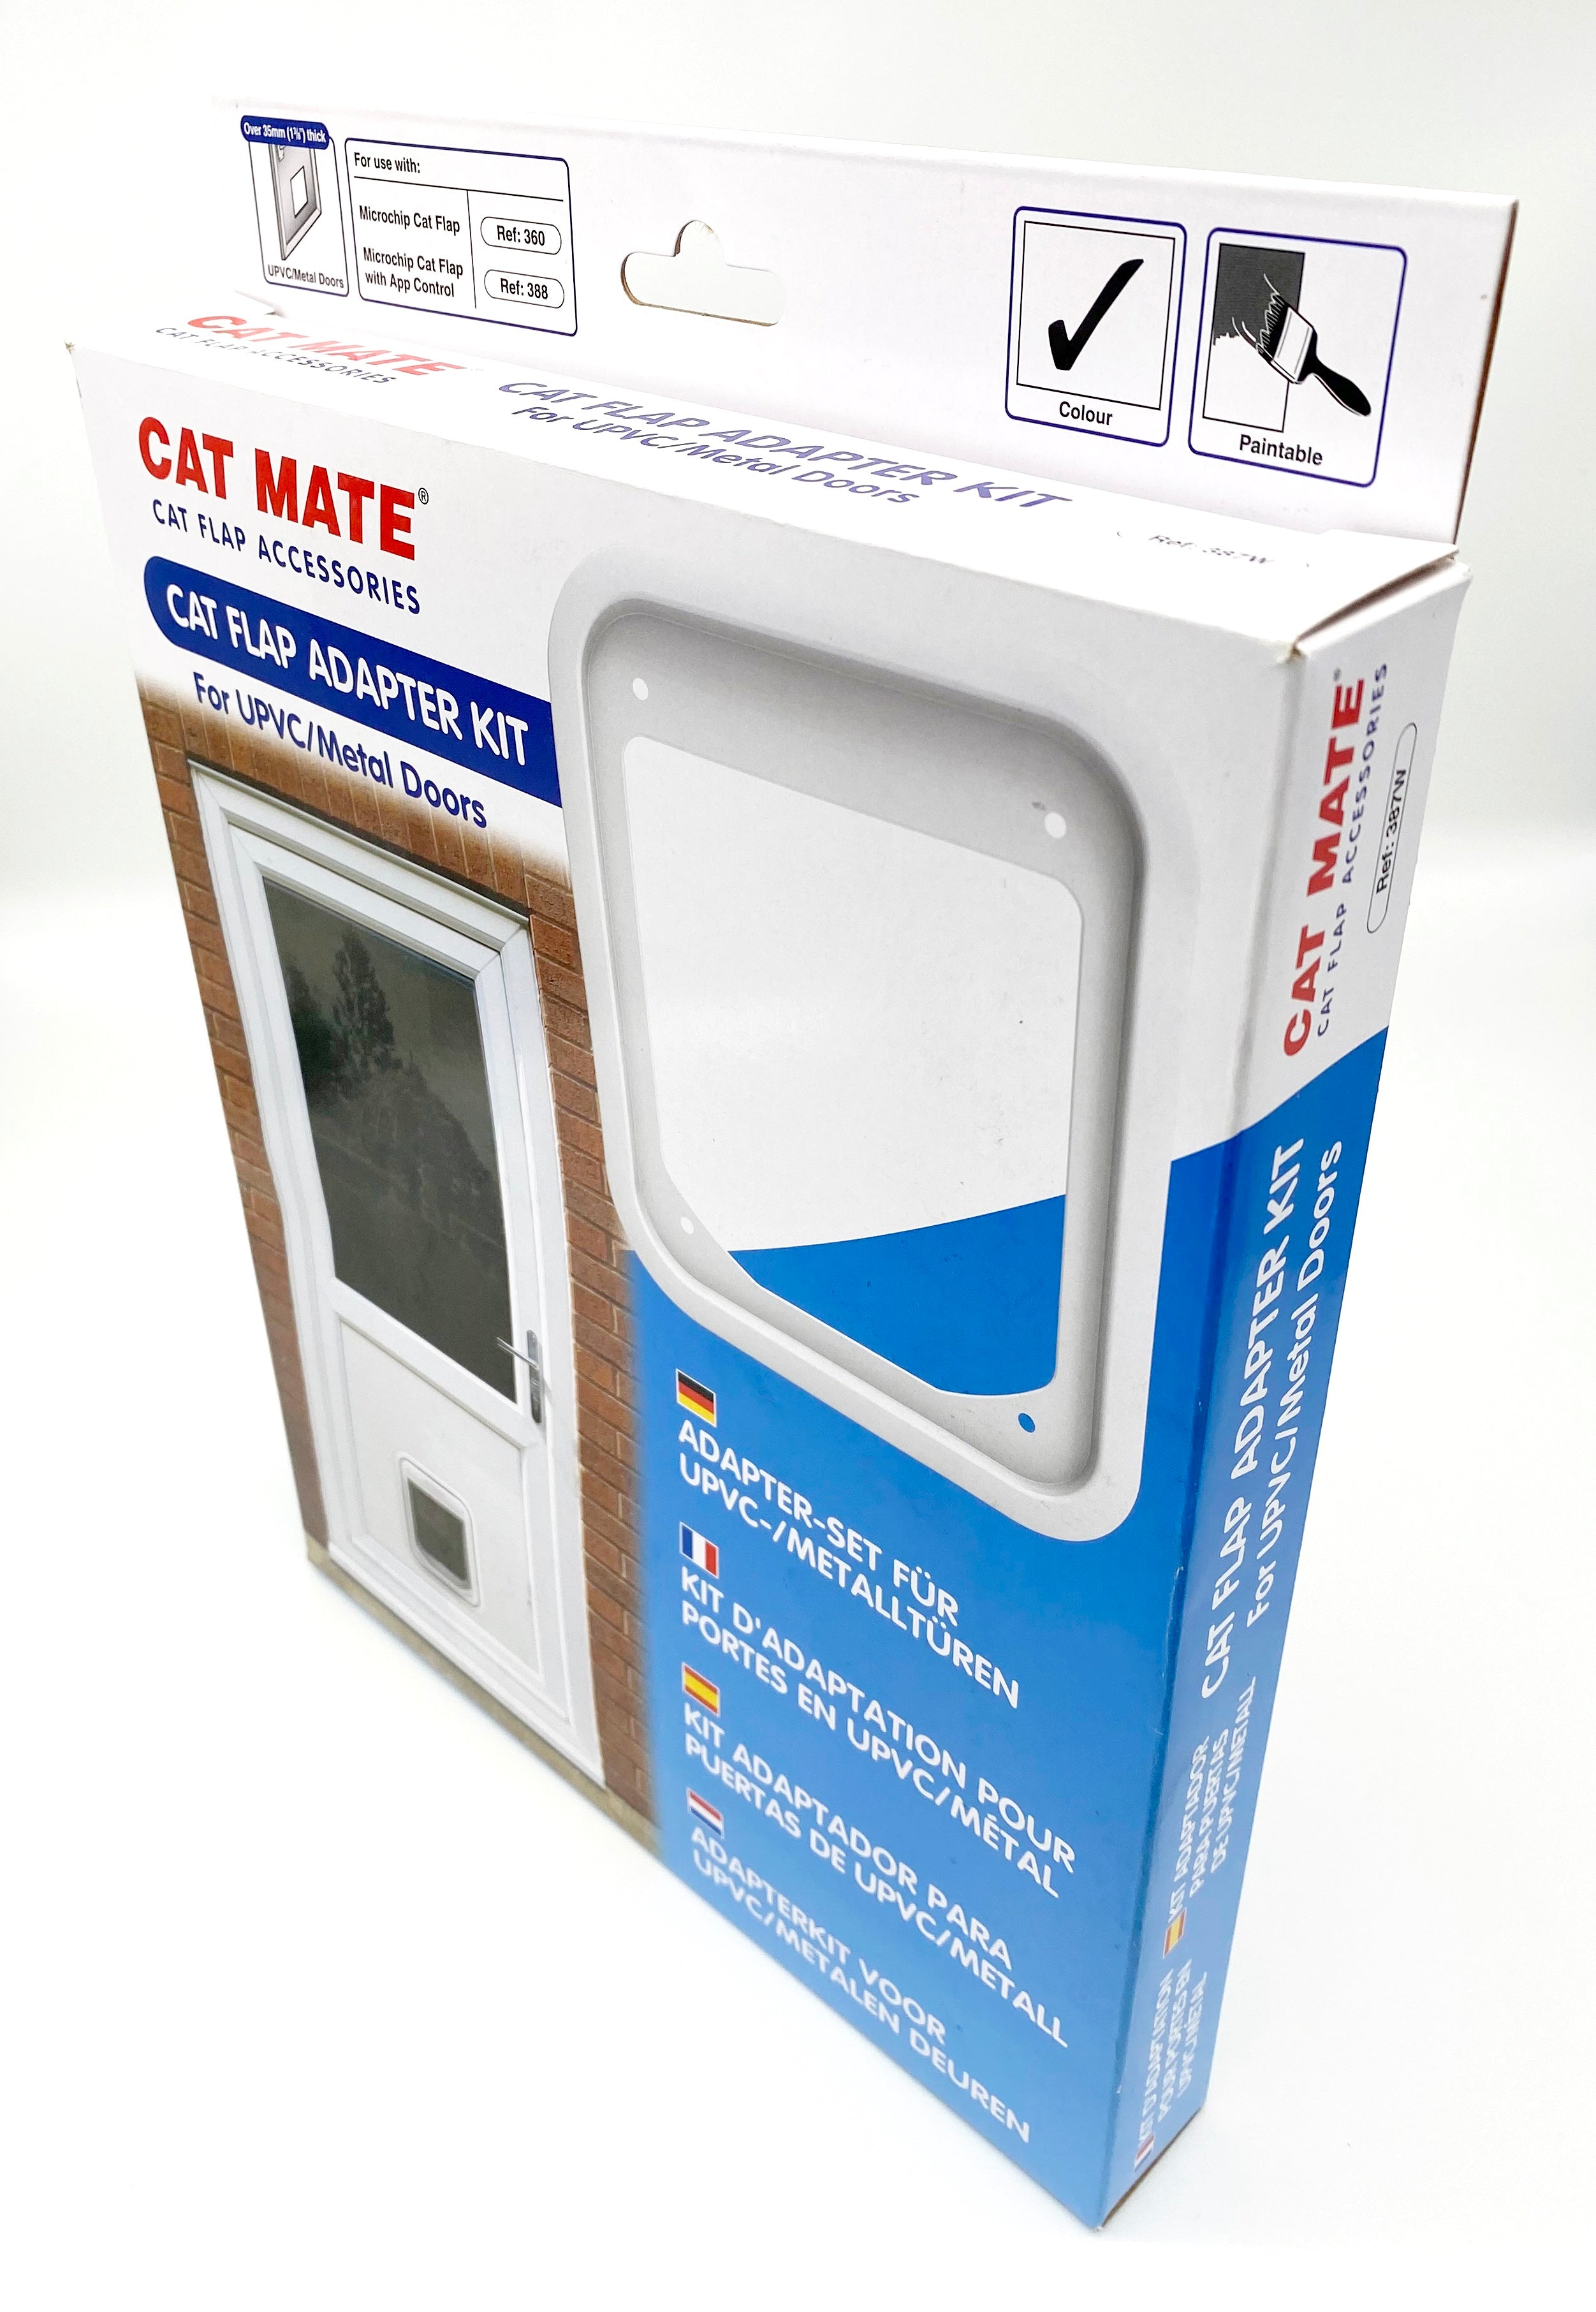 Cat Flap Adapter Kit for UPVC/Metal Doors (387)